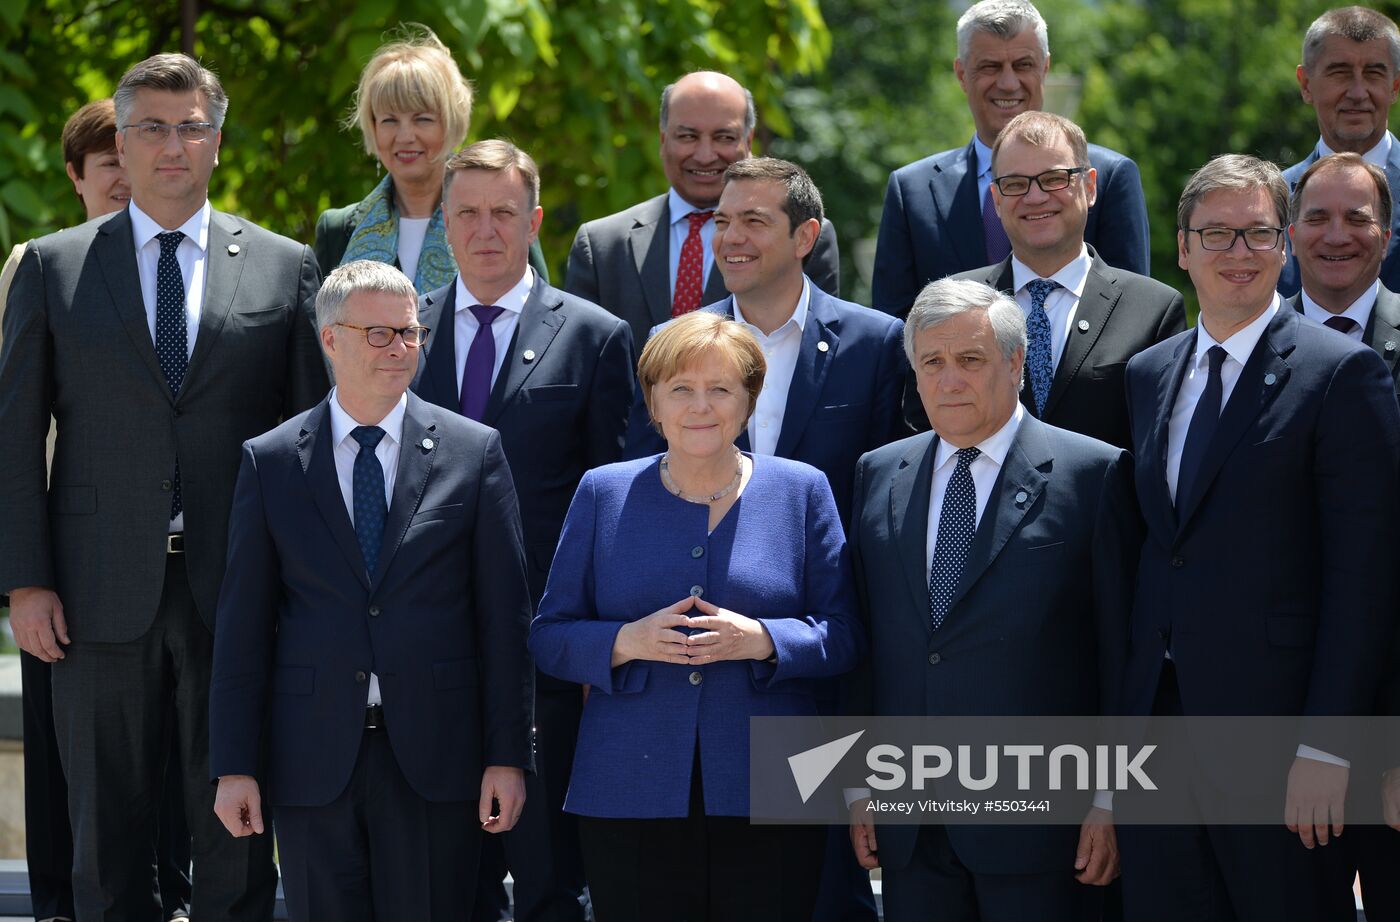 EU-Western Balkans Summit in Sofia